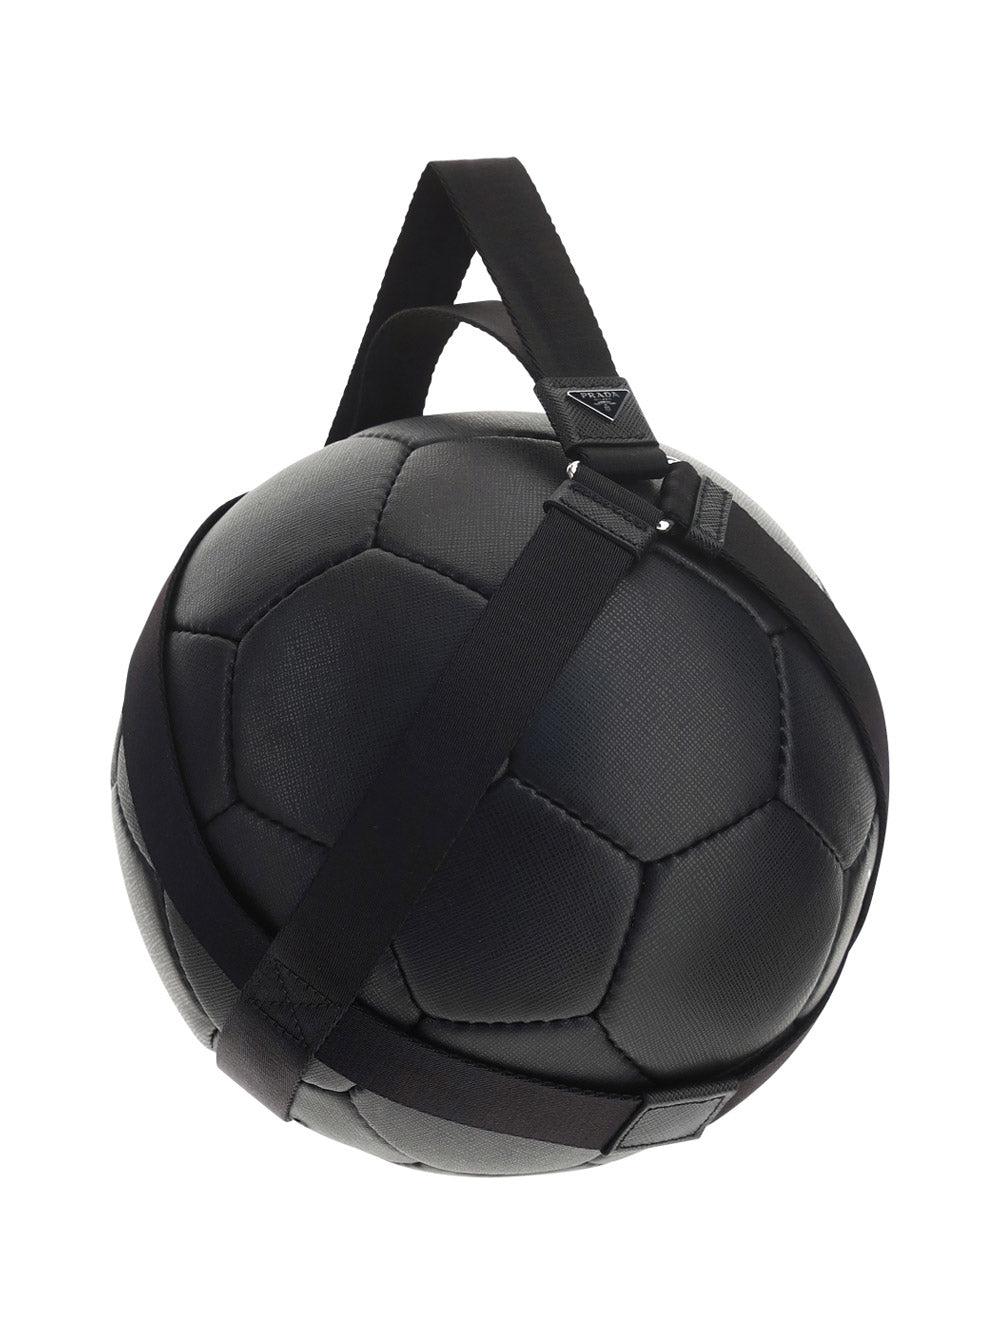 Saffiano Leather Soccer Ball - Black